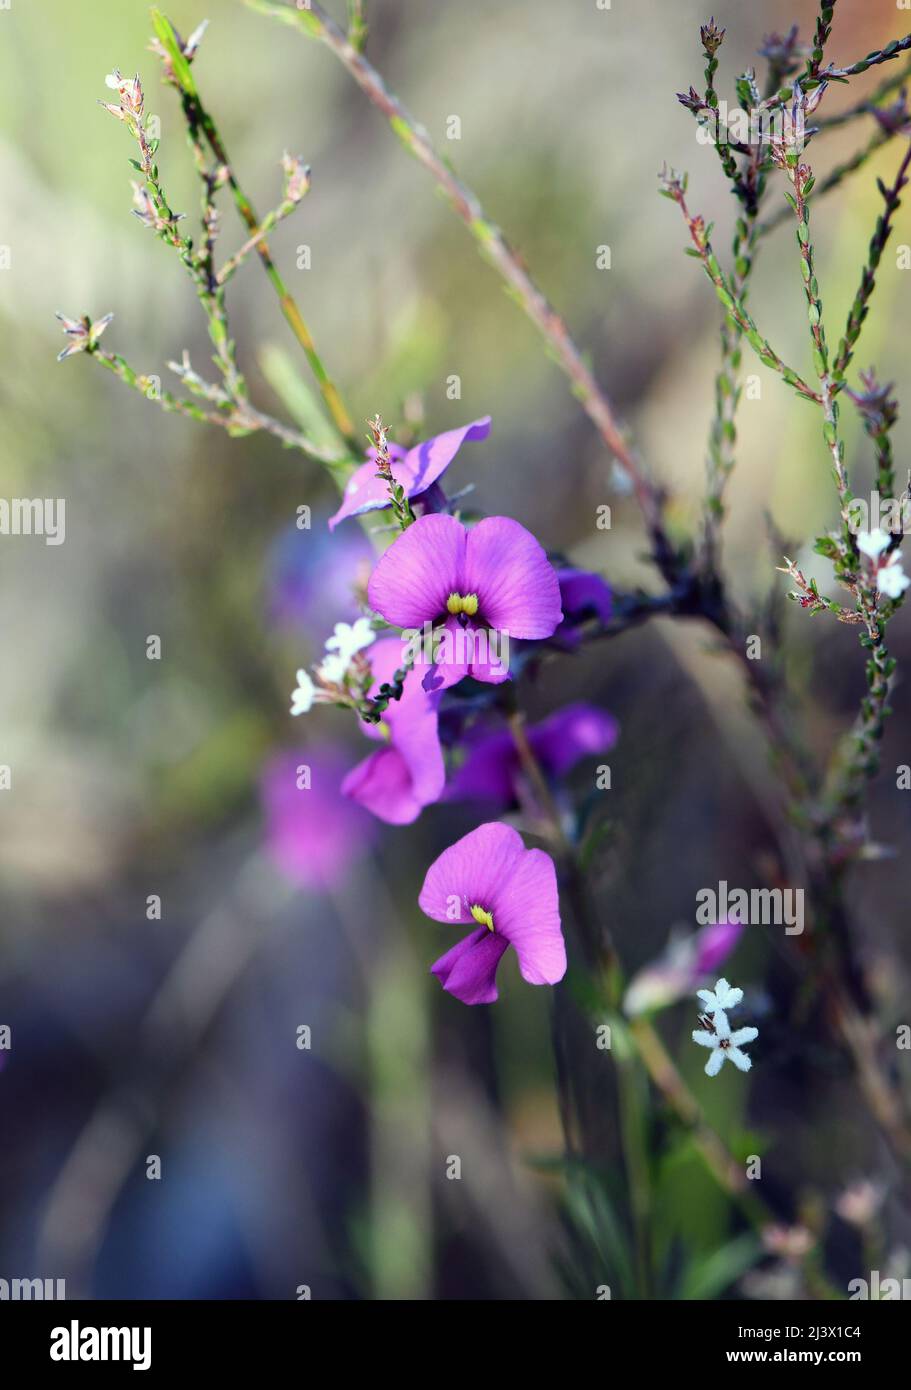 Winter to spring flowering Australian native purple pea flowers, Mirbelia speciosa, family Fabaceae, growing in woodland understory, Sydney, NSW Stock Photo